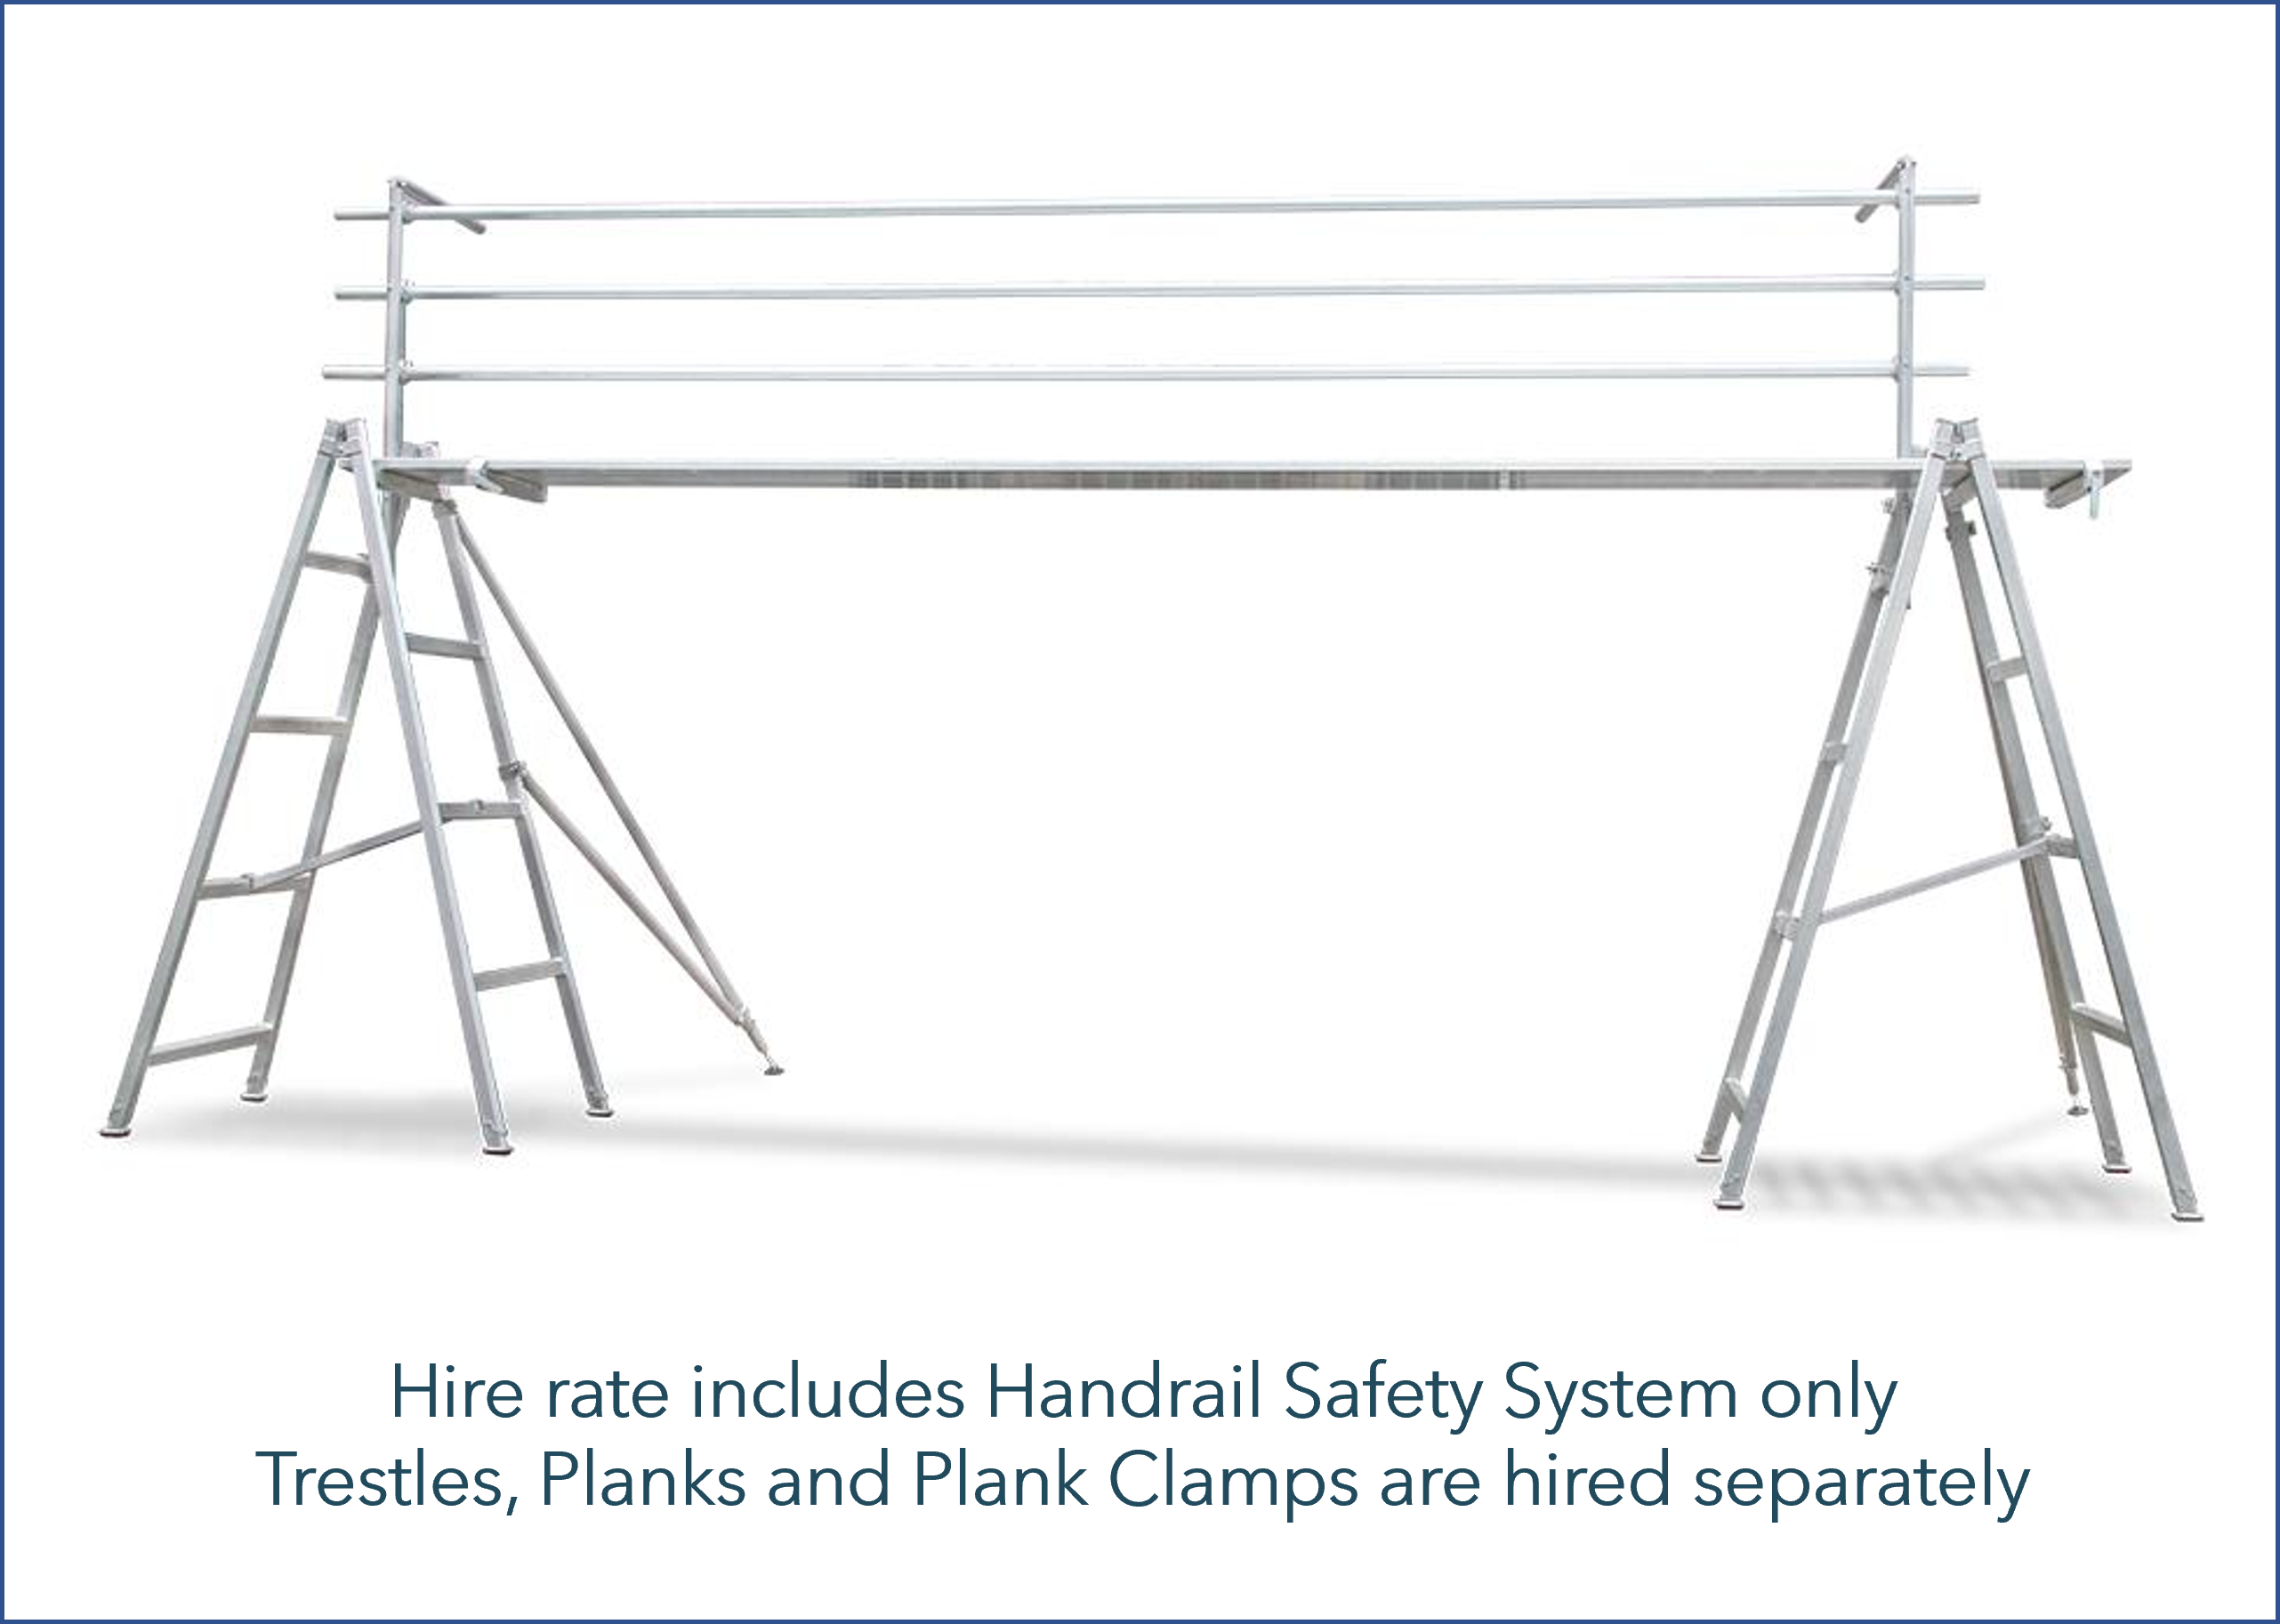 Trestle - Safety Handrail System